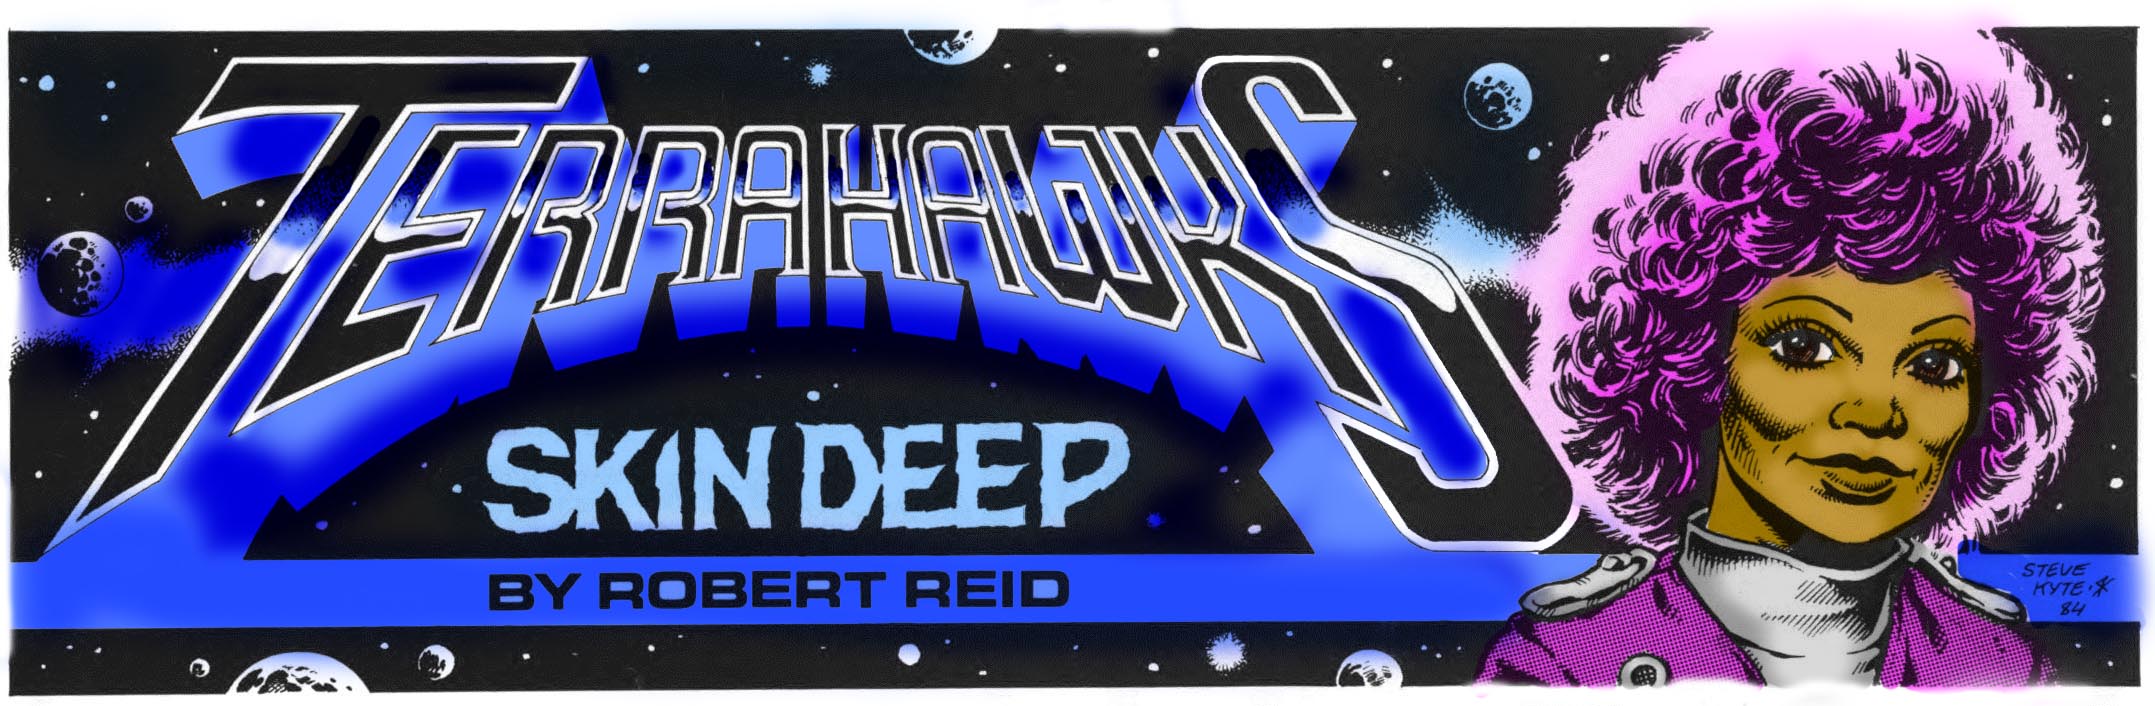 Terrahawks: Skin Deep - by Robert Reid